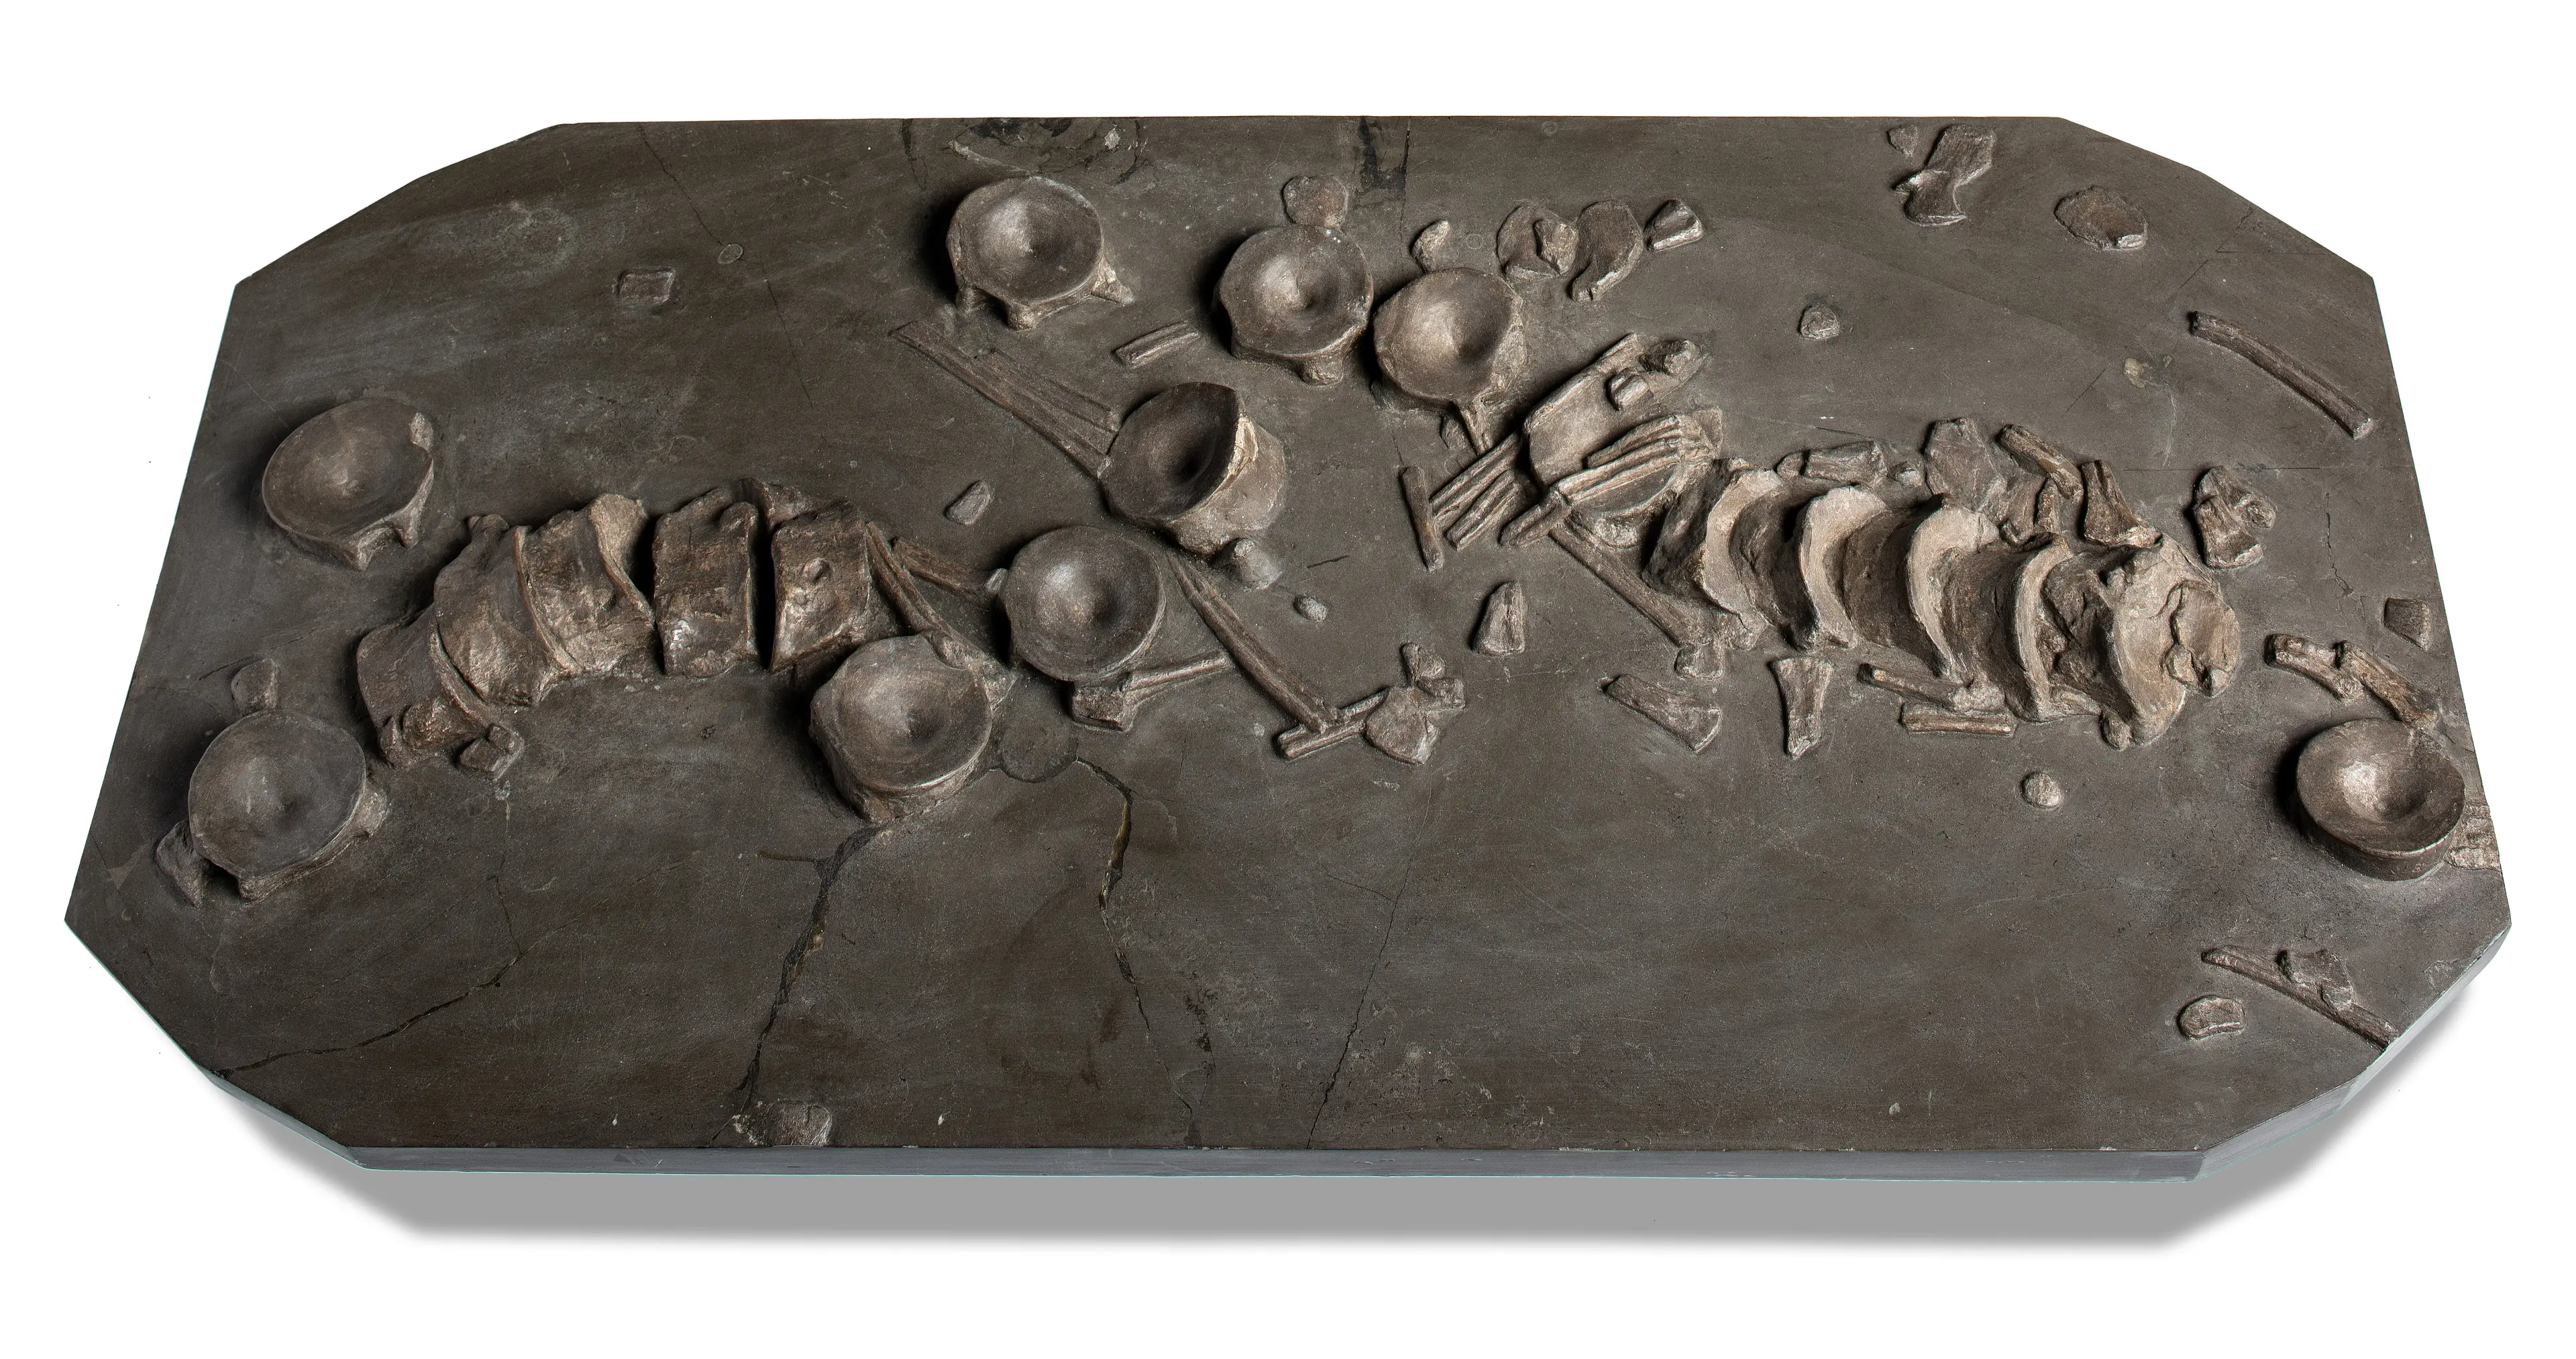 An Ichthyosaur vertebrae with some ribs plaque